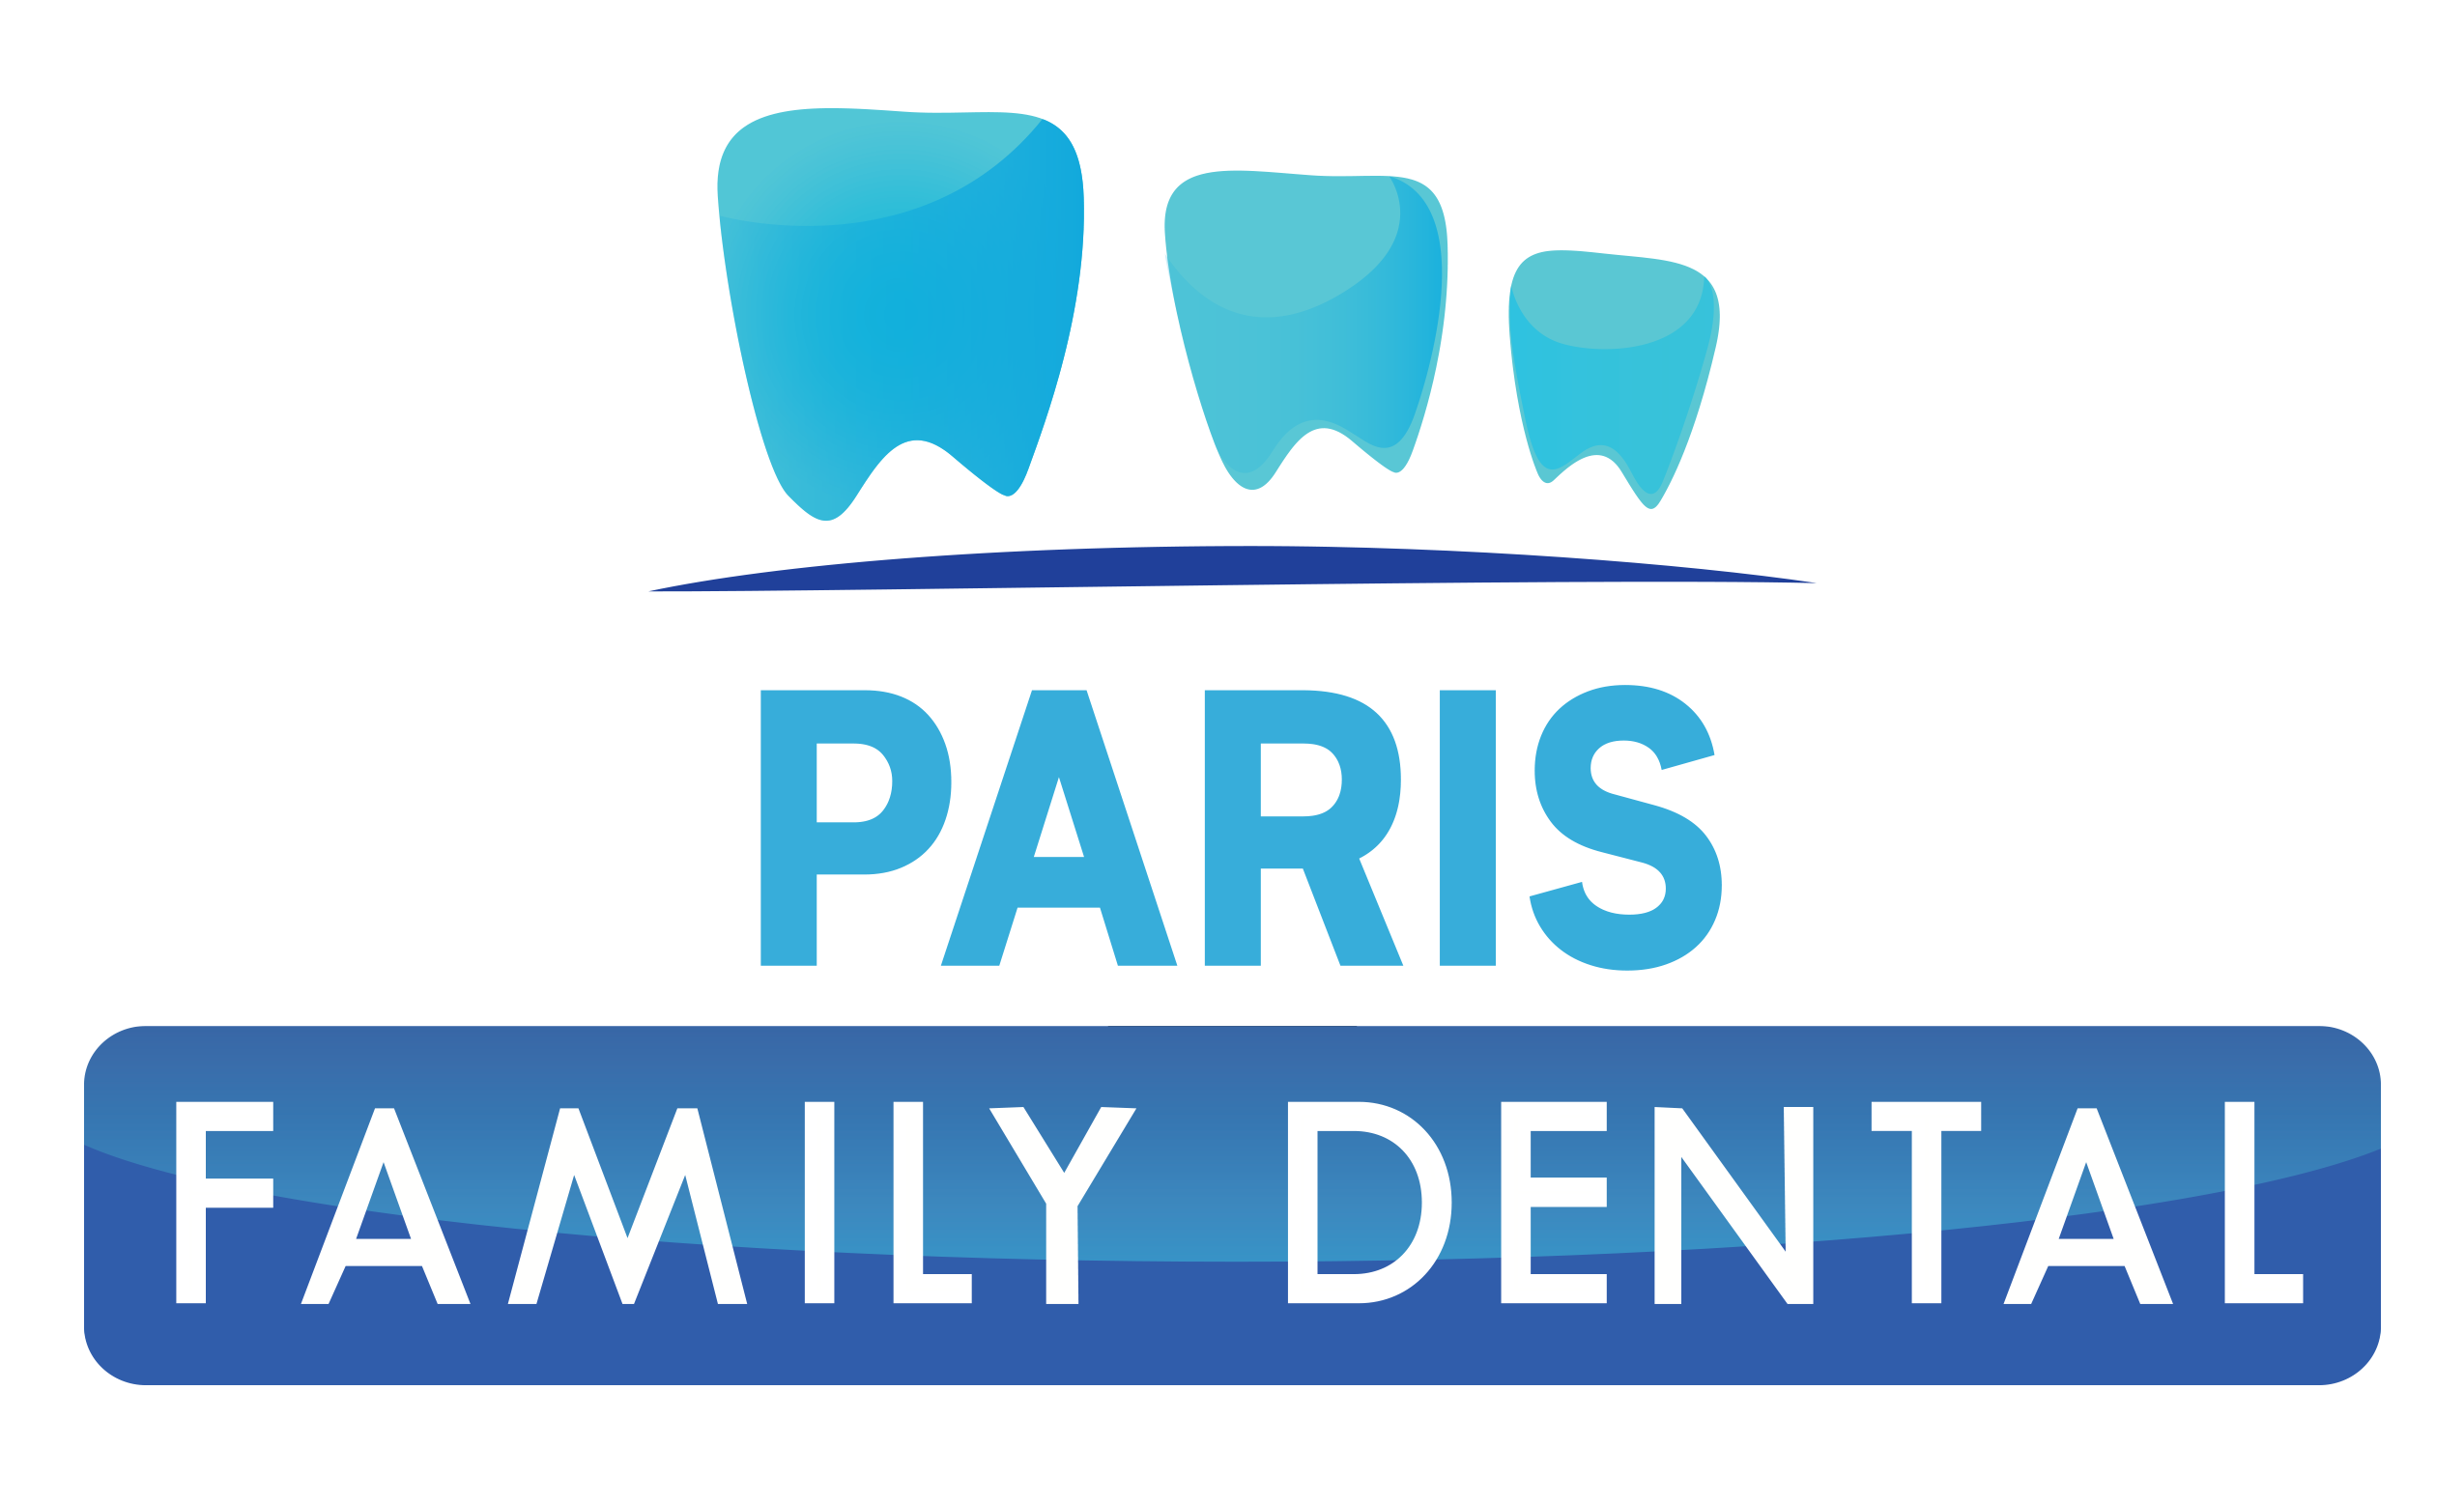 Paris Family Dental - Logo